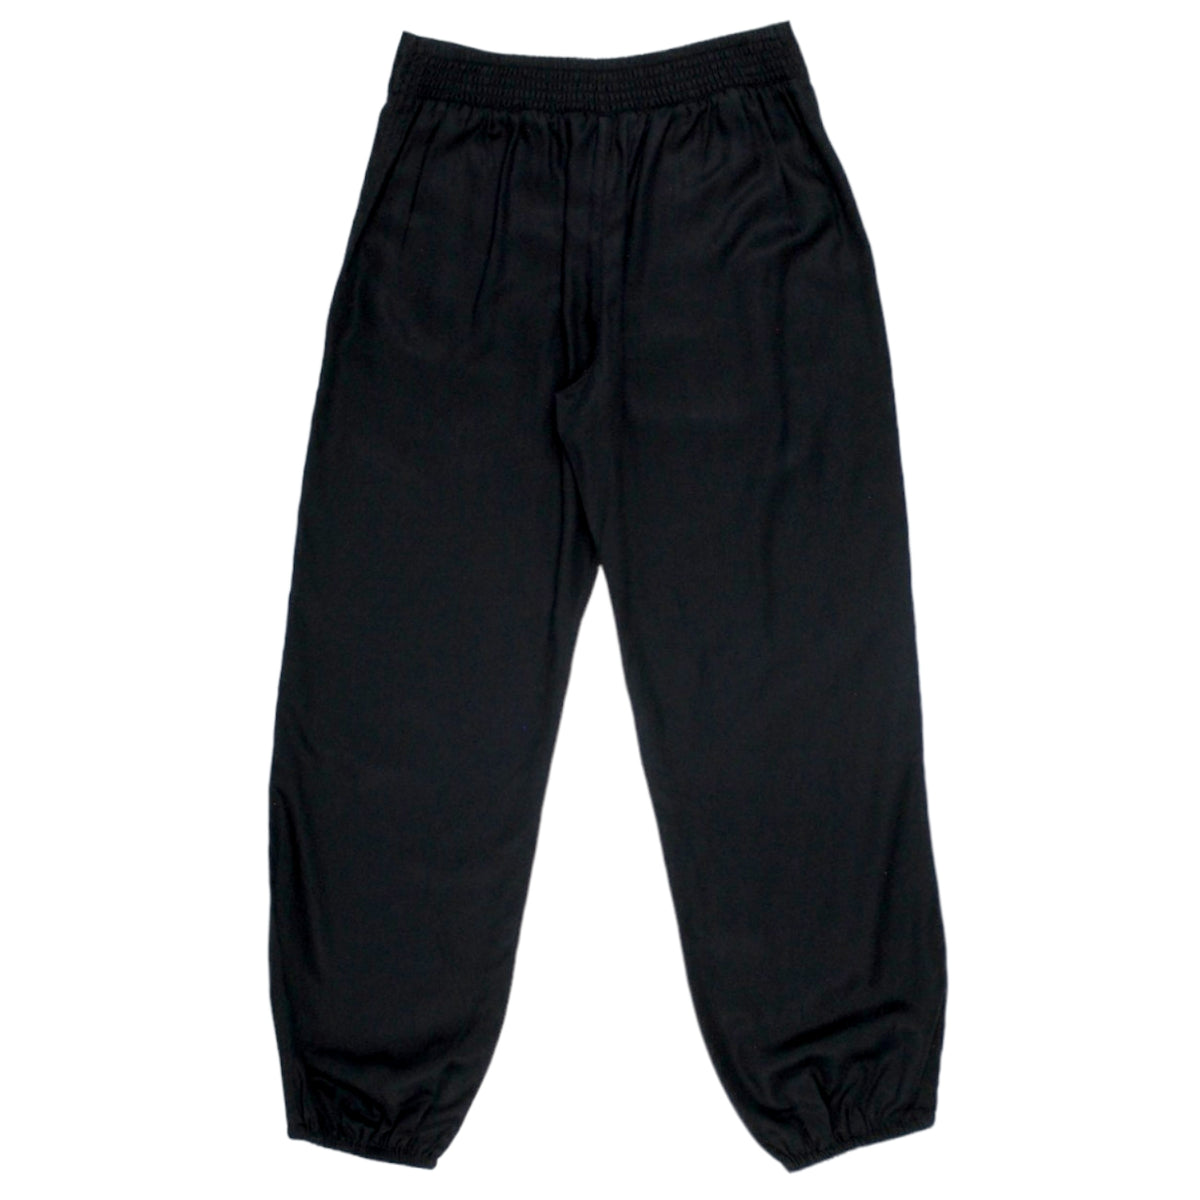 NRBY Black Cargo Style Pants - Sample